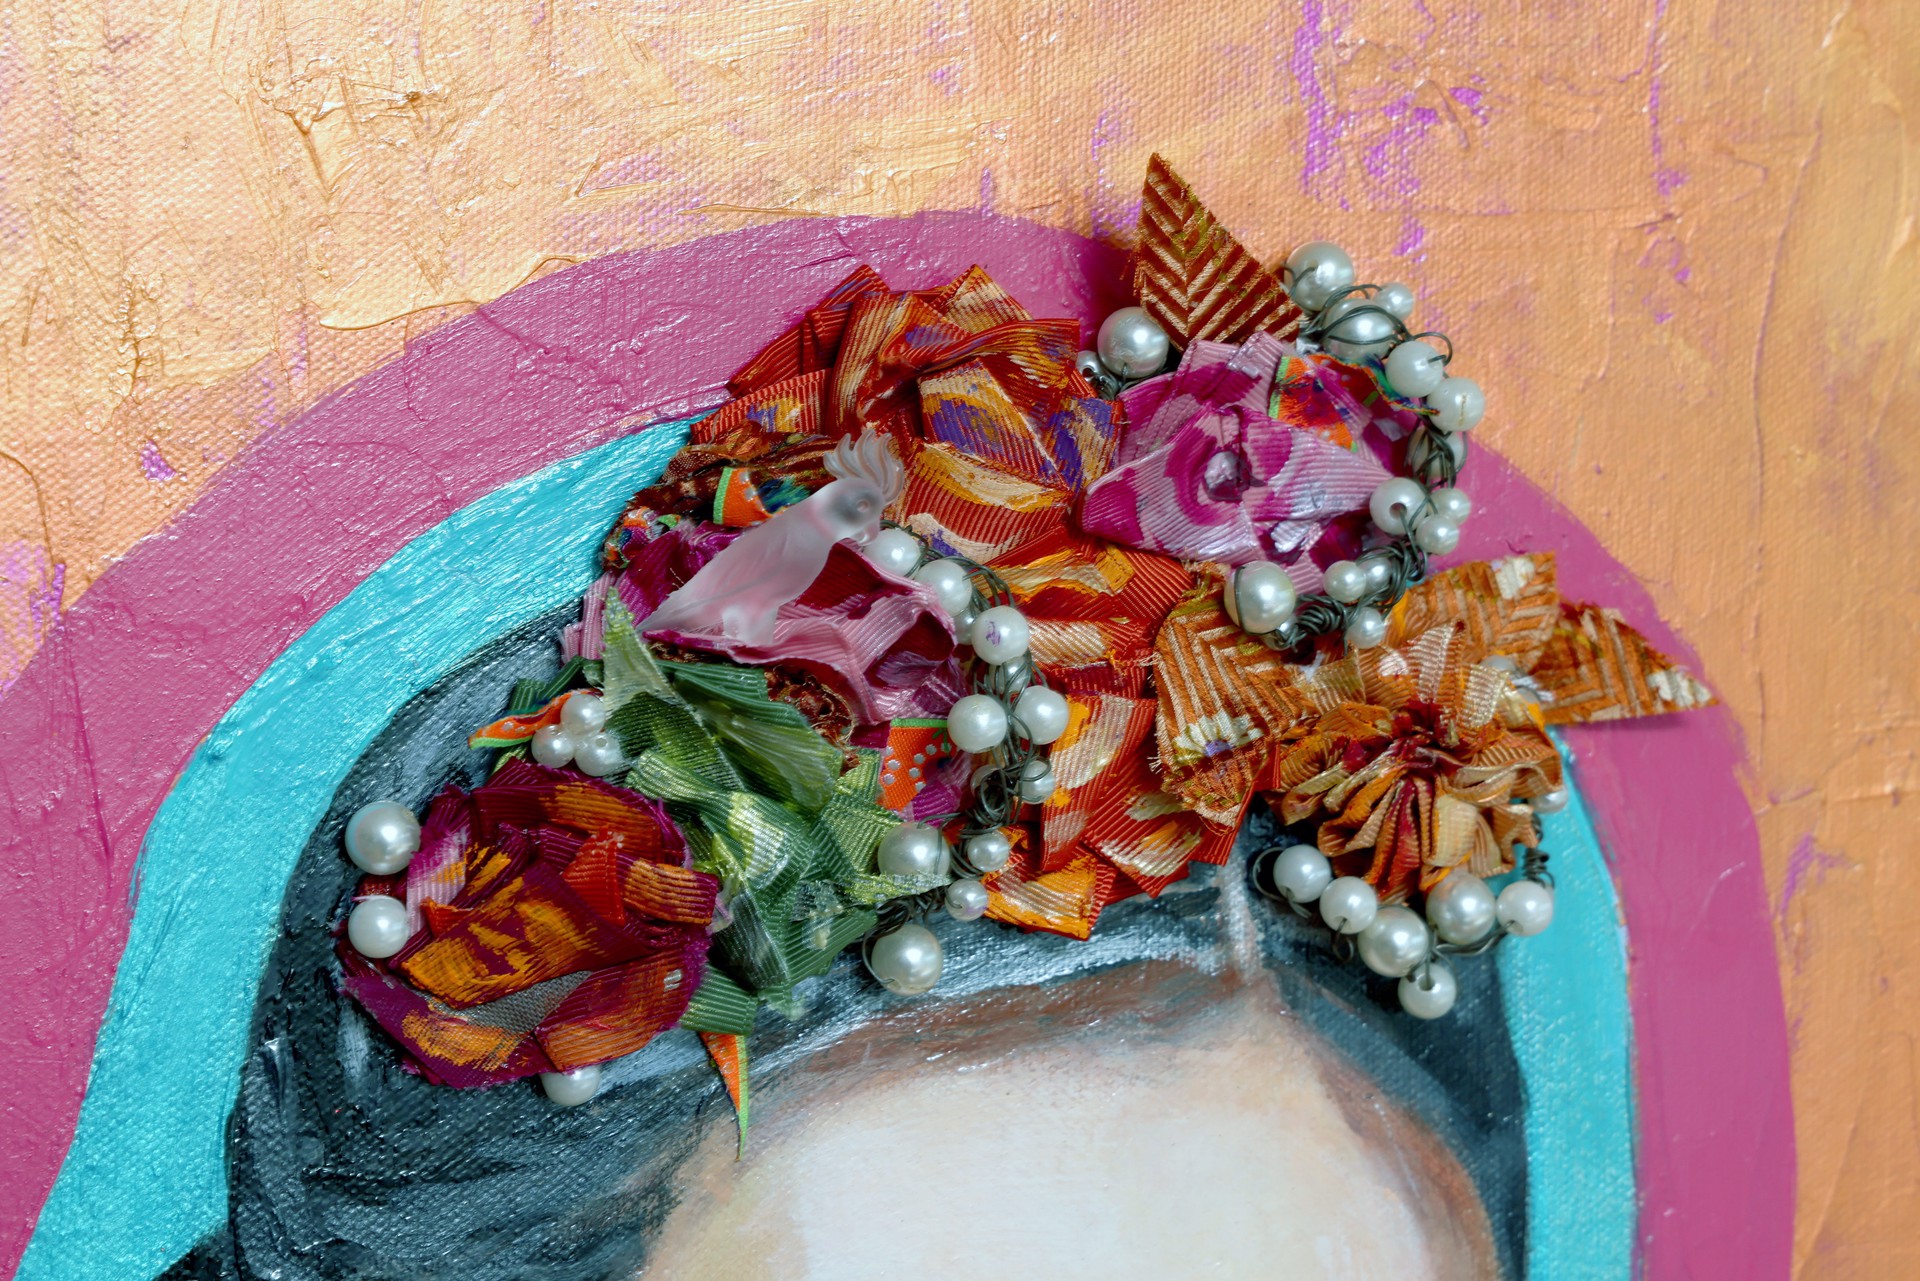 Frida with Hairdress by Ricardo Lowenberg